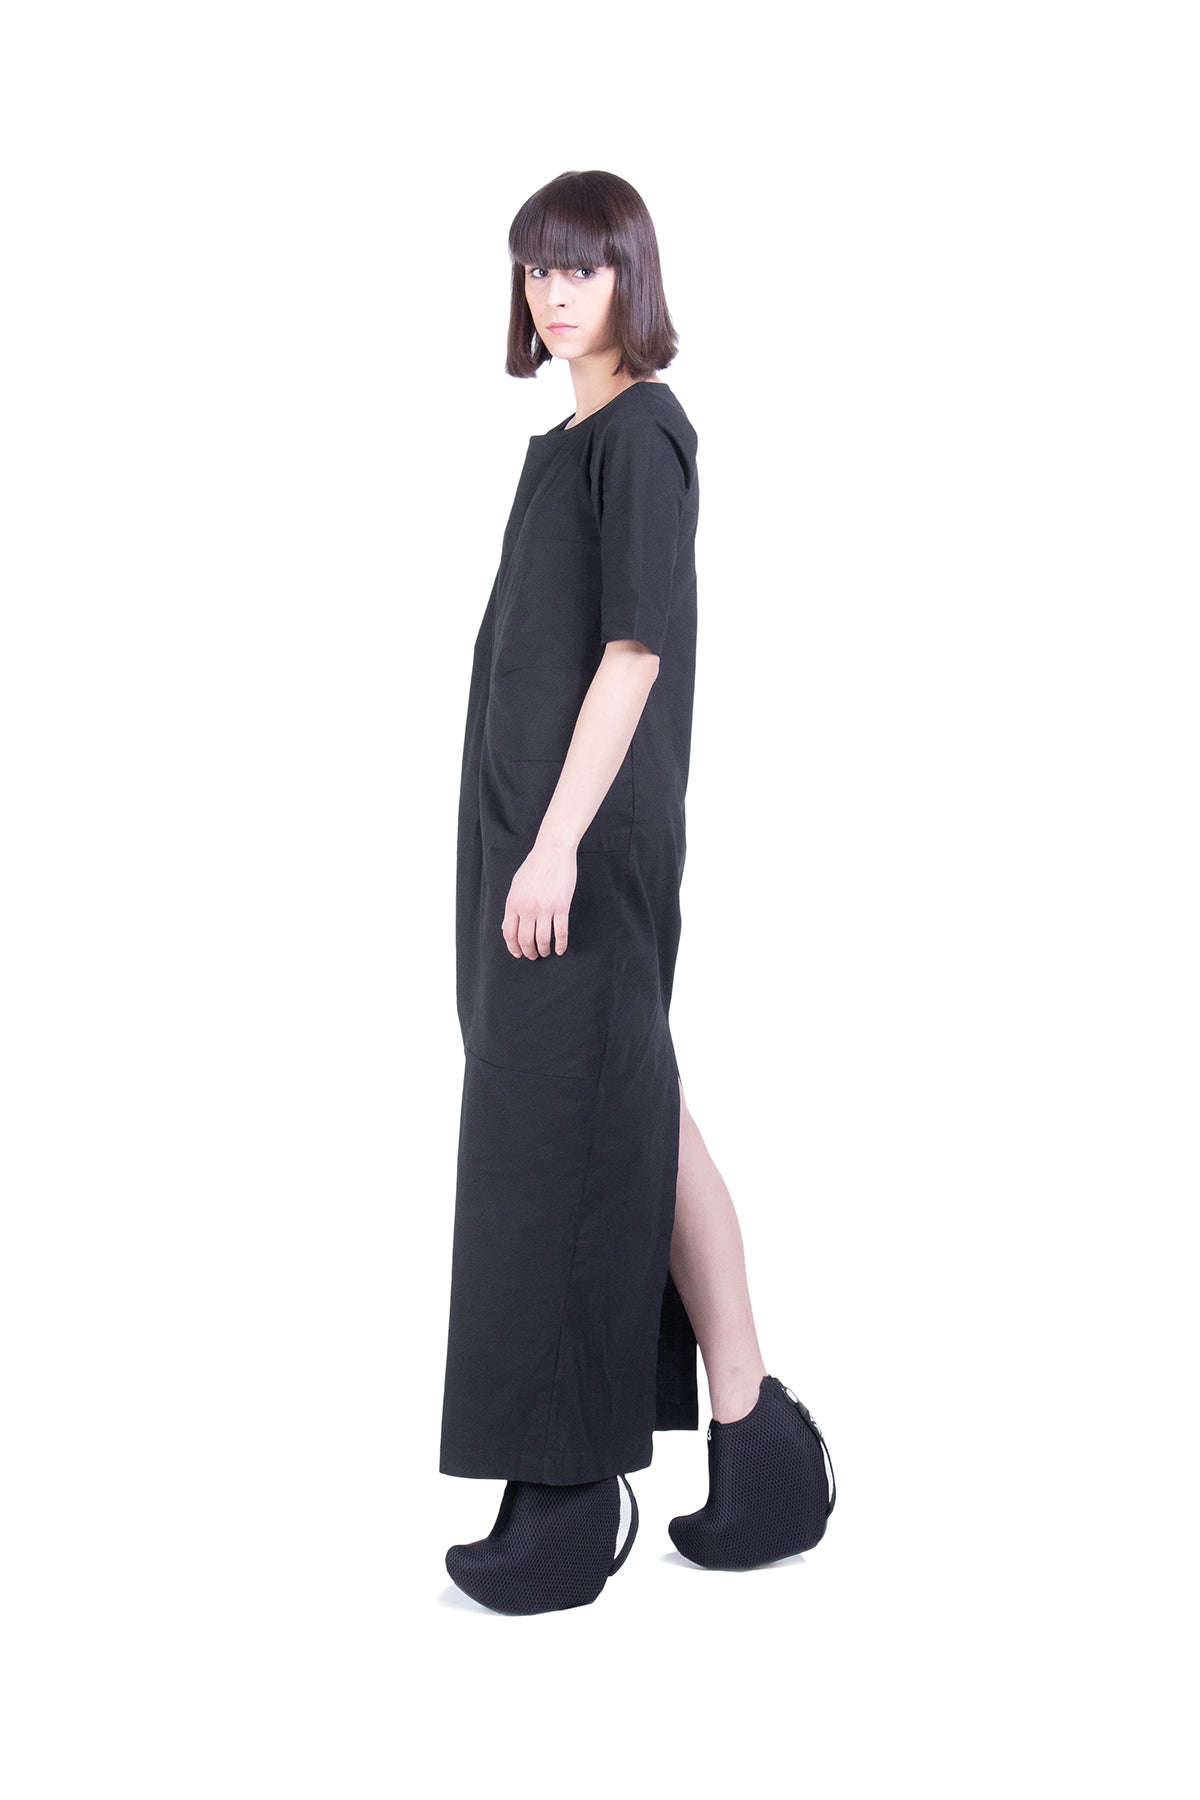 Short Sleeves Linen Tube Dress - Natural Born Humans Store